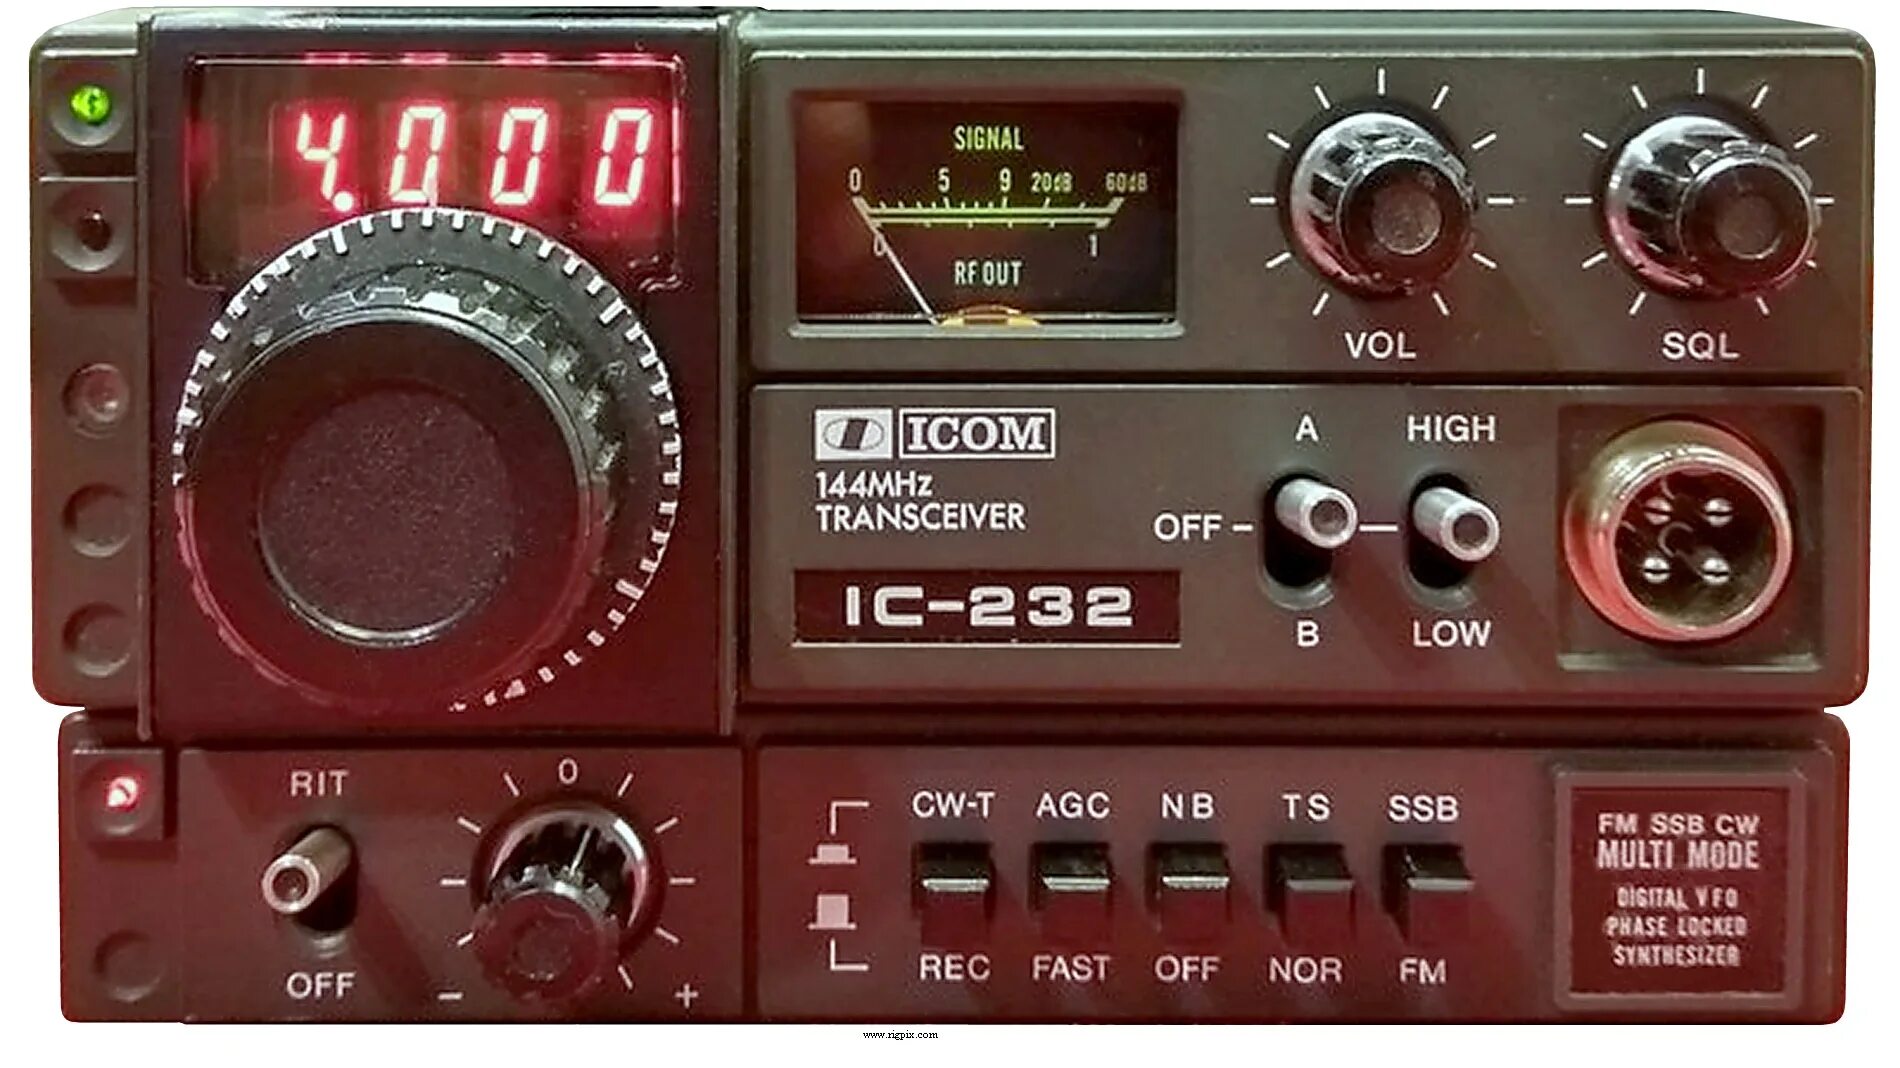 Icom ic-232. Ic-232. Форум радиолюбителей куплю продам. Форум радиолюбителей куплю продам трансиверы.